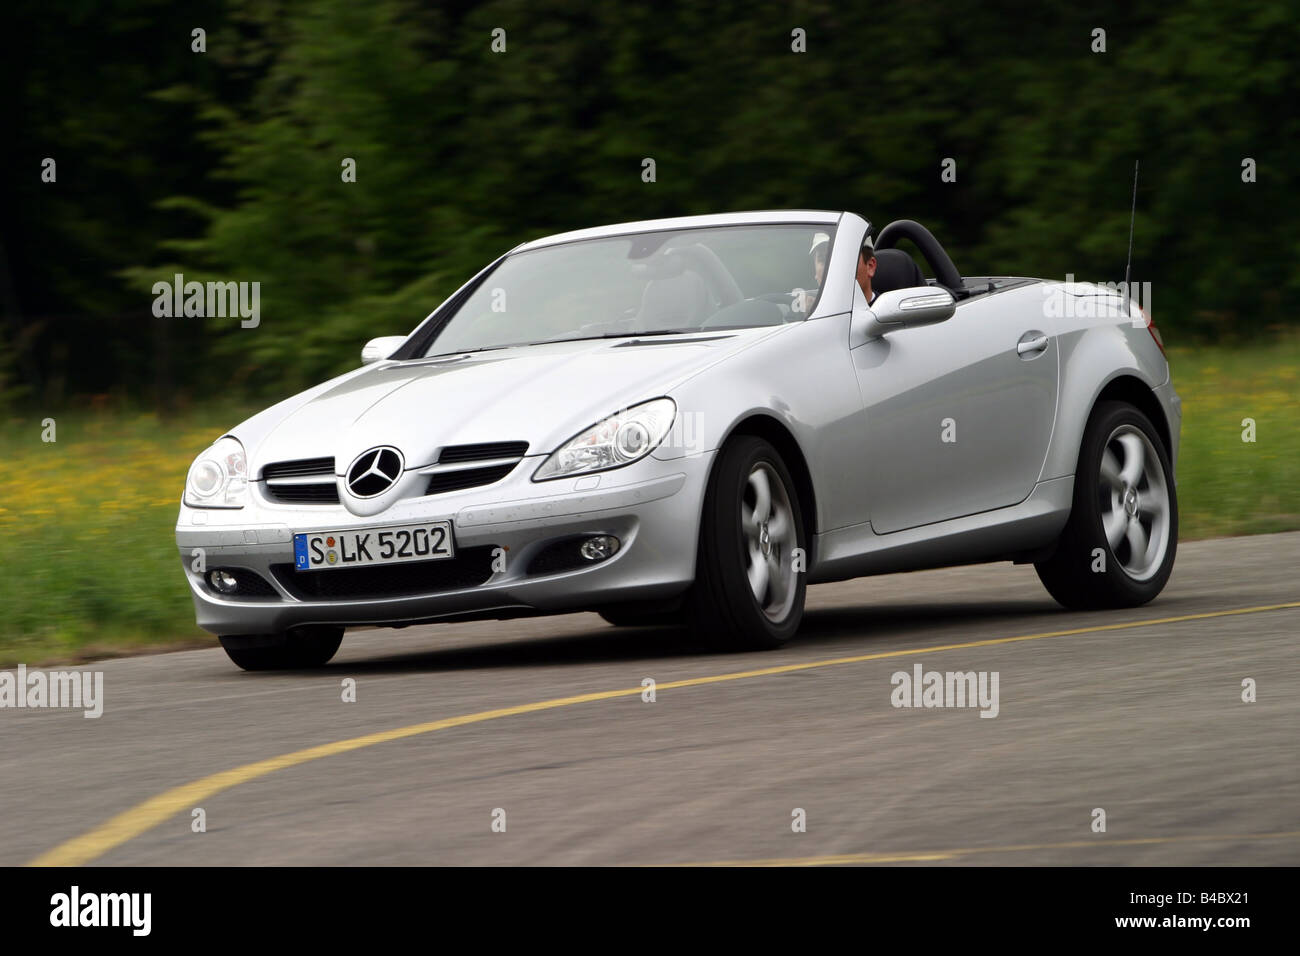 Mercedes slk 200 kompressor auto hi-res stock photography and images - Alamy